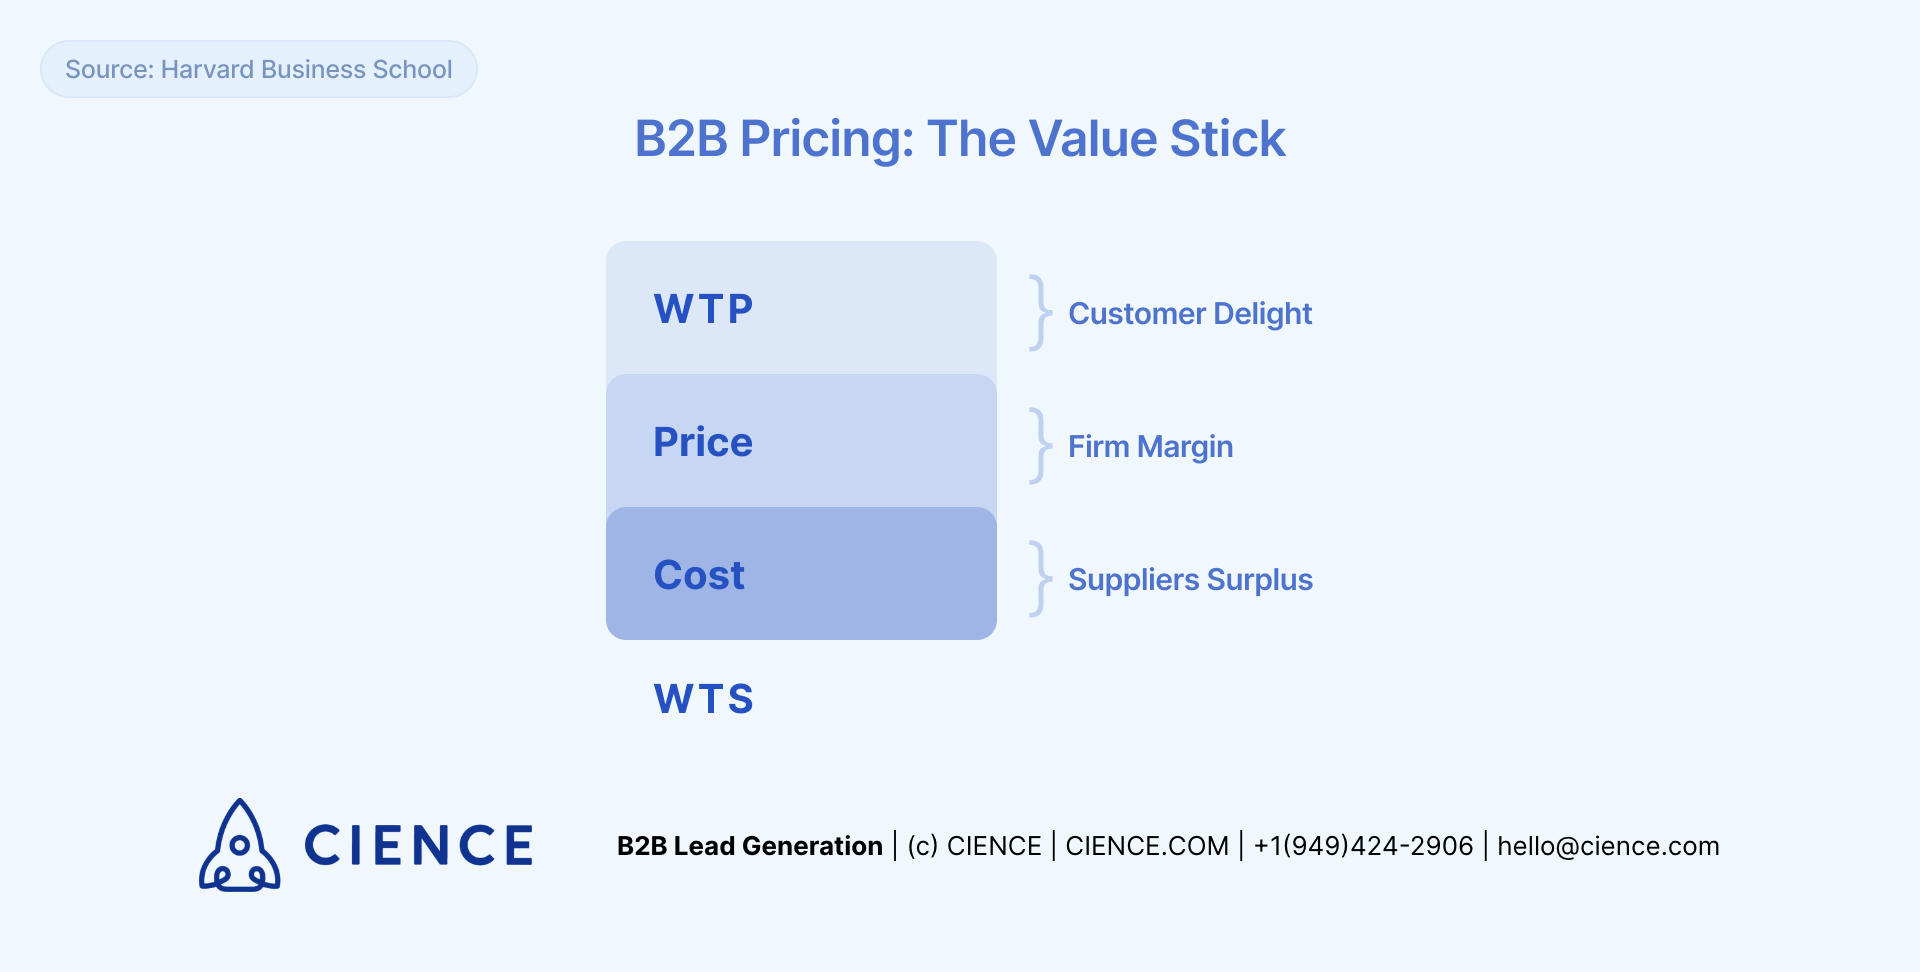 B2B pricing: the value stick